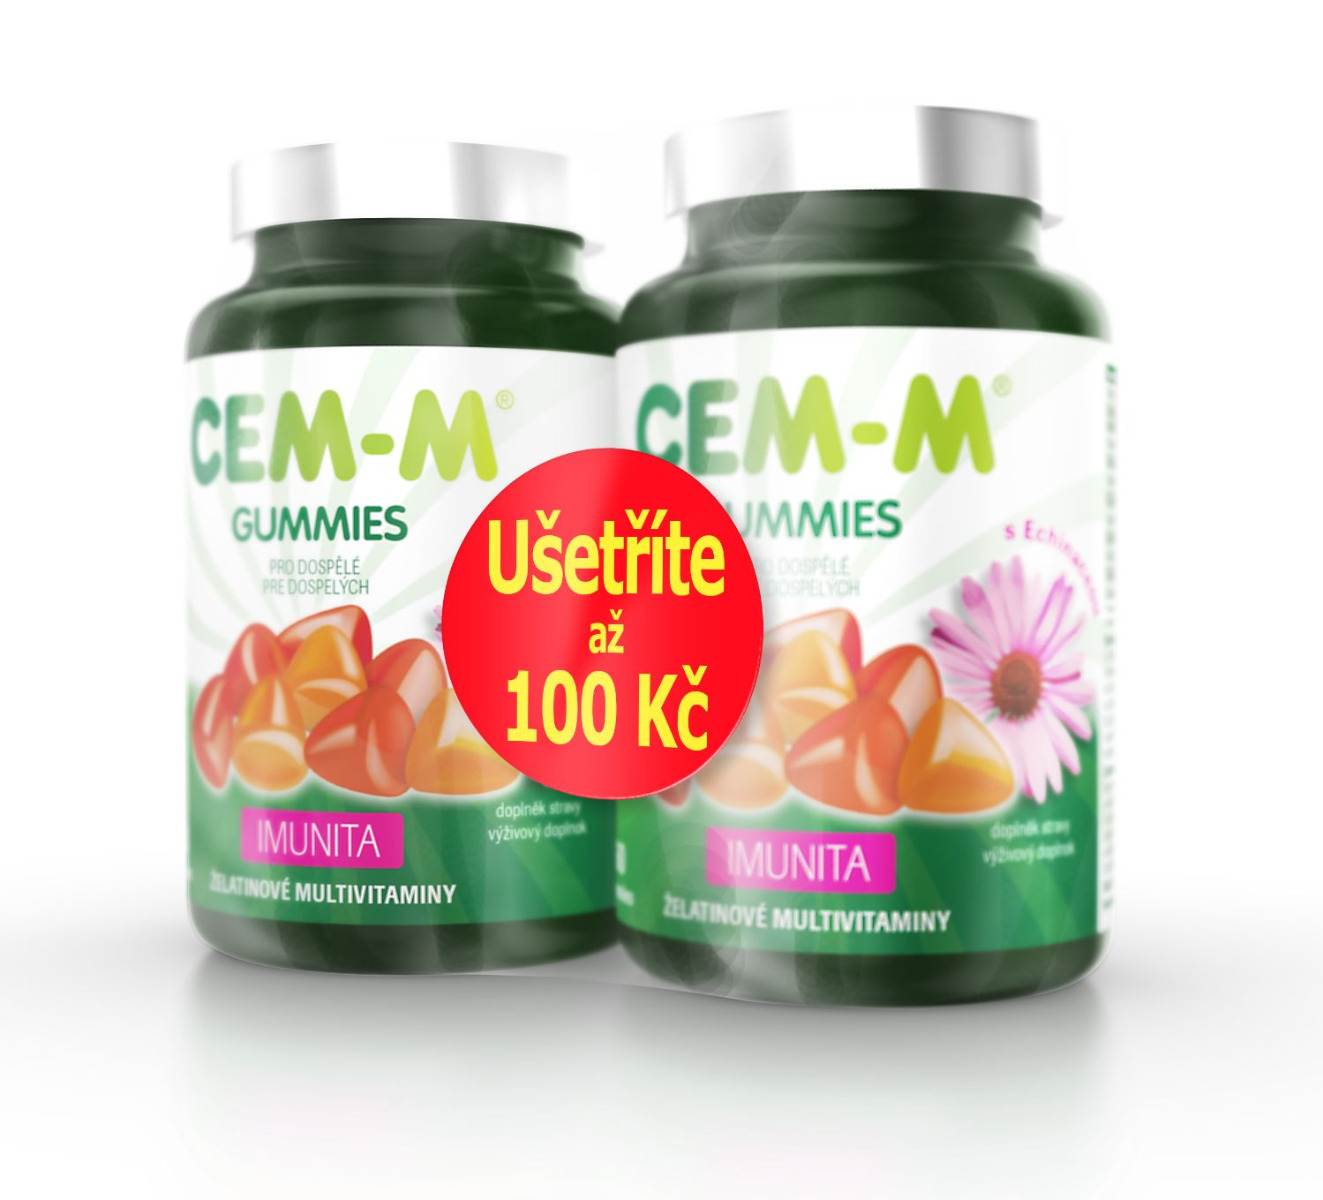 Cem-m gummies Imunita 60+60 tablet Cem-m